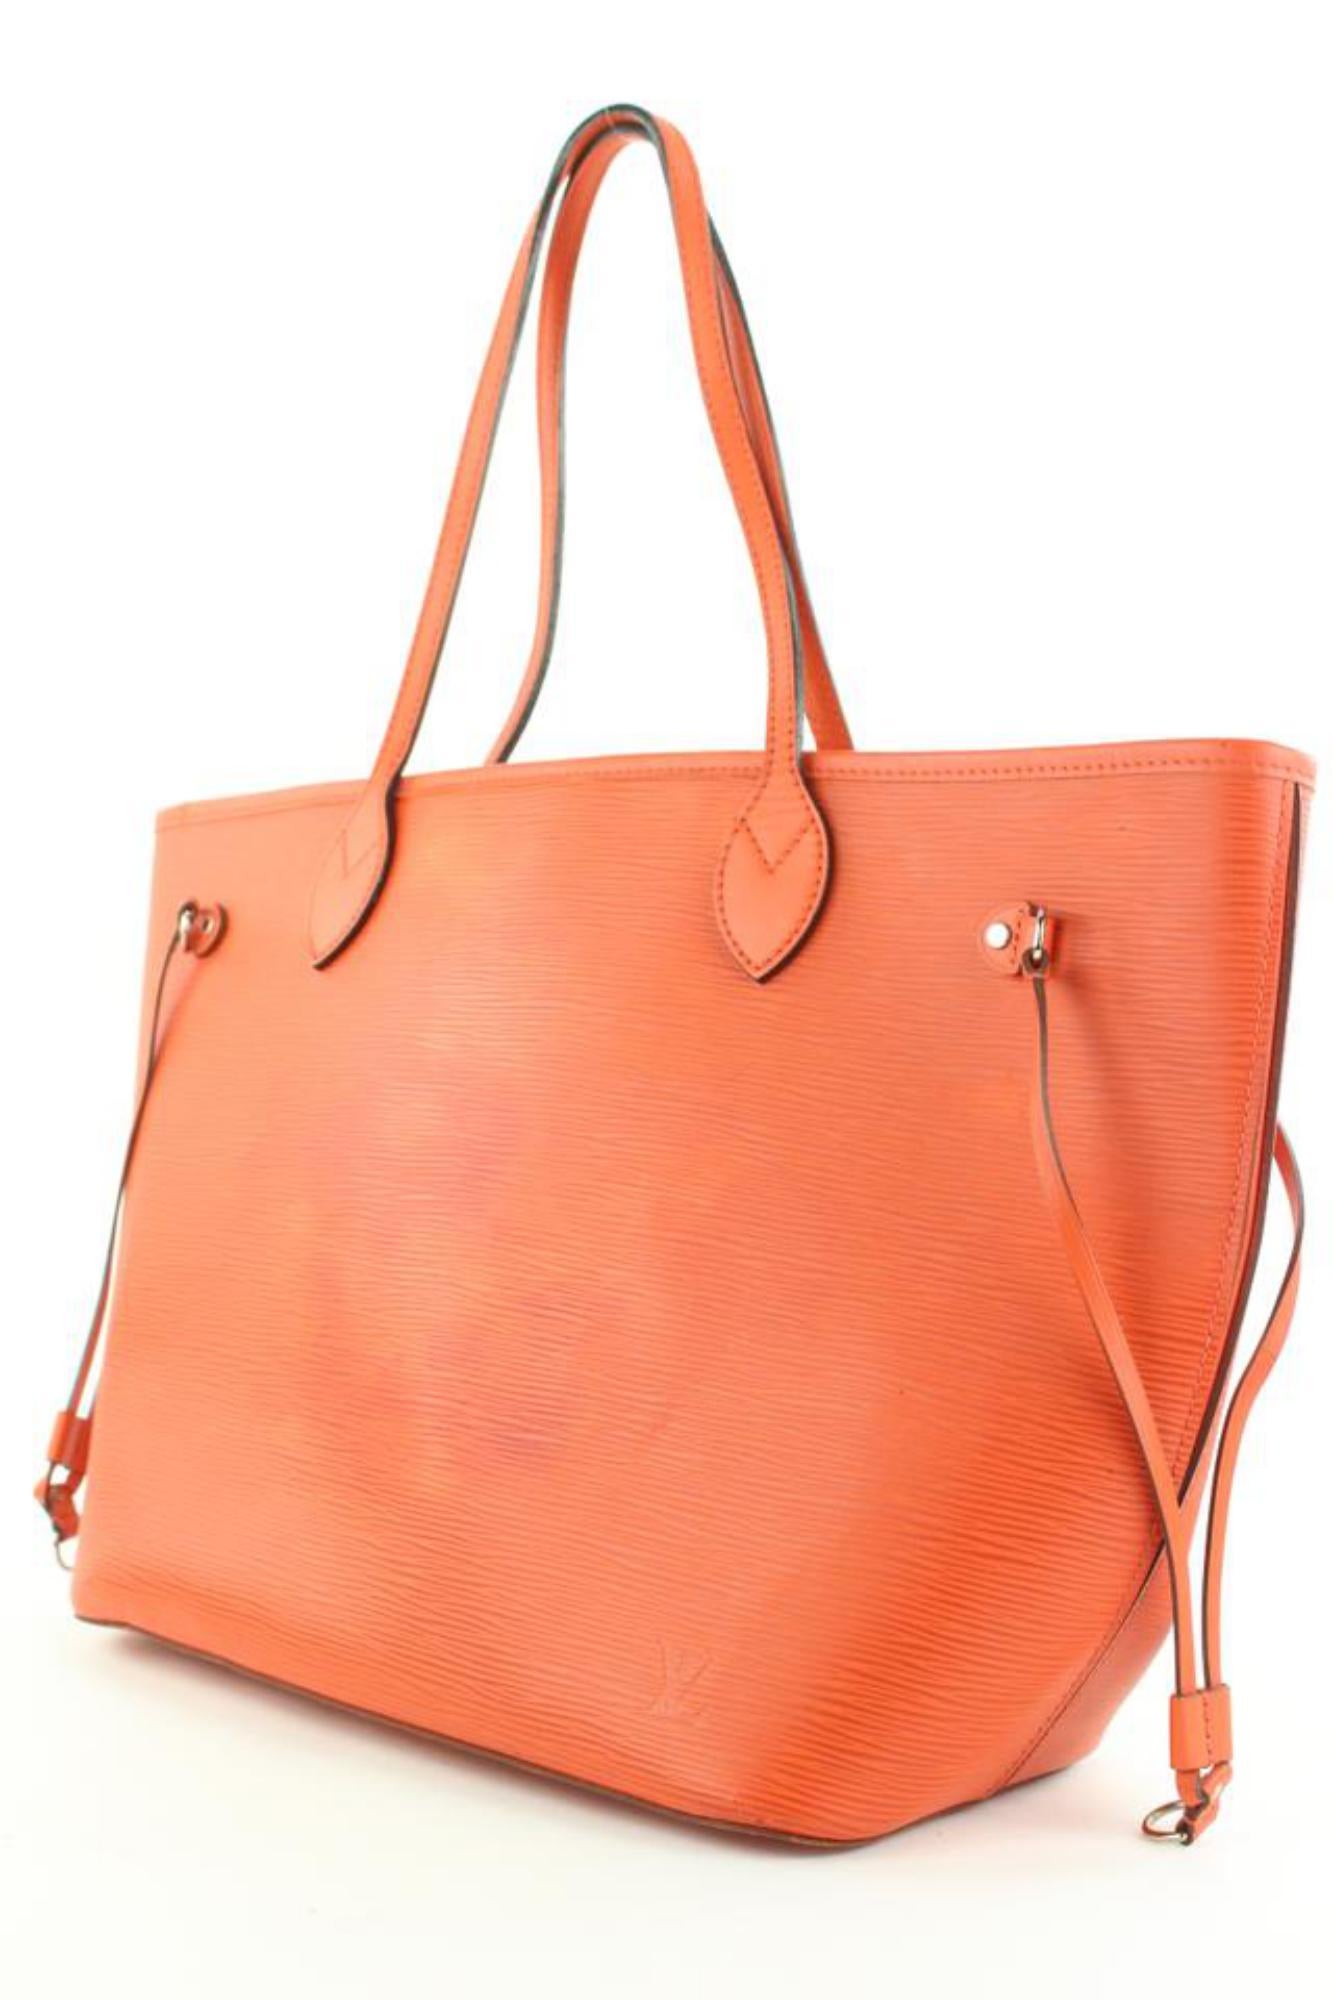 Louis Vuitton Neverfull MM Tote Bag aus Epi-Leder in Mandarin und Orange 855344 im Angebot 8